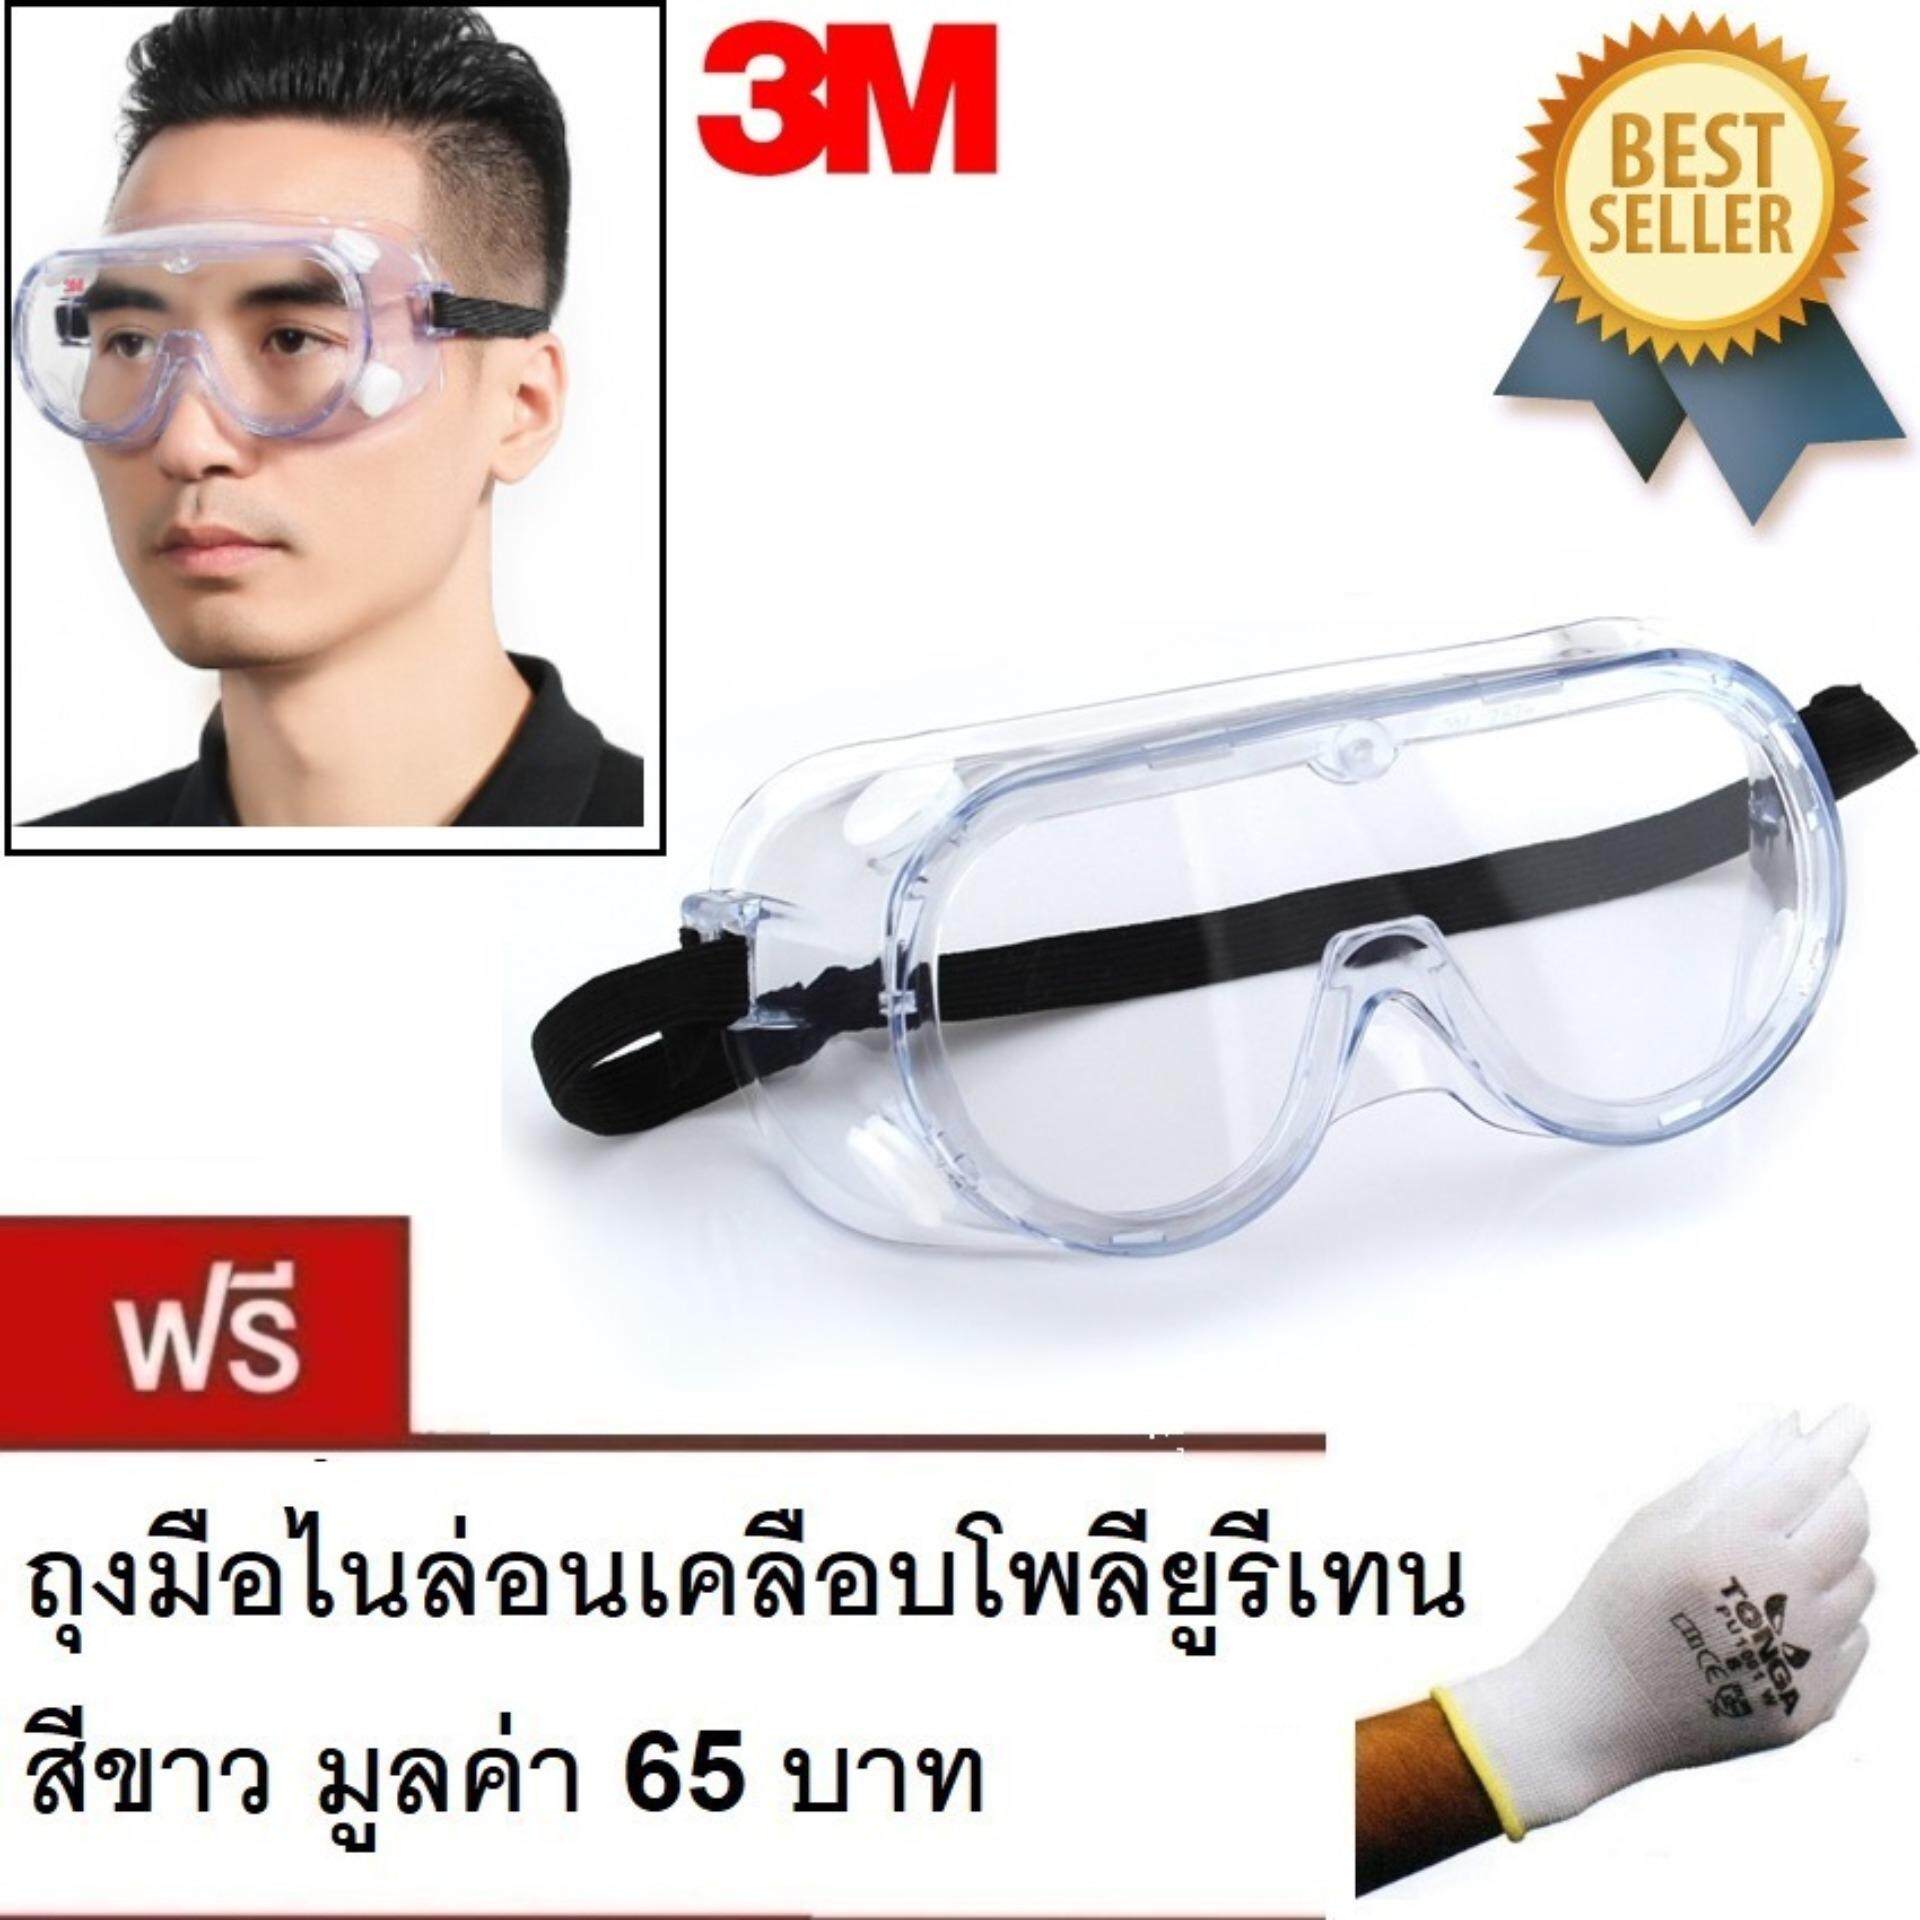 3M แว่นตานิรภัย ครอบตานิรภัย รุ่น 1621 3M Safety Goggles for Splash แถม ถุงมือ PU สีขาว 1621 Polycarbonate Safety Goggles for Chemical Splash)